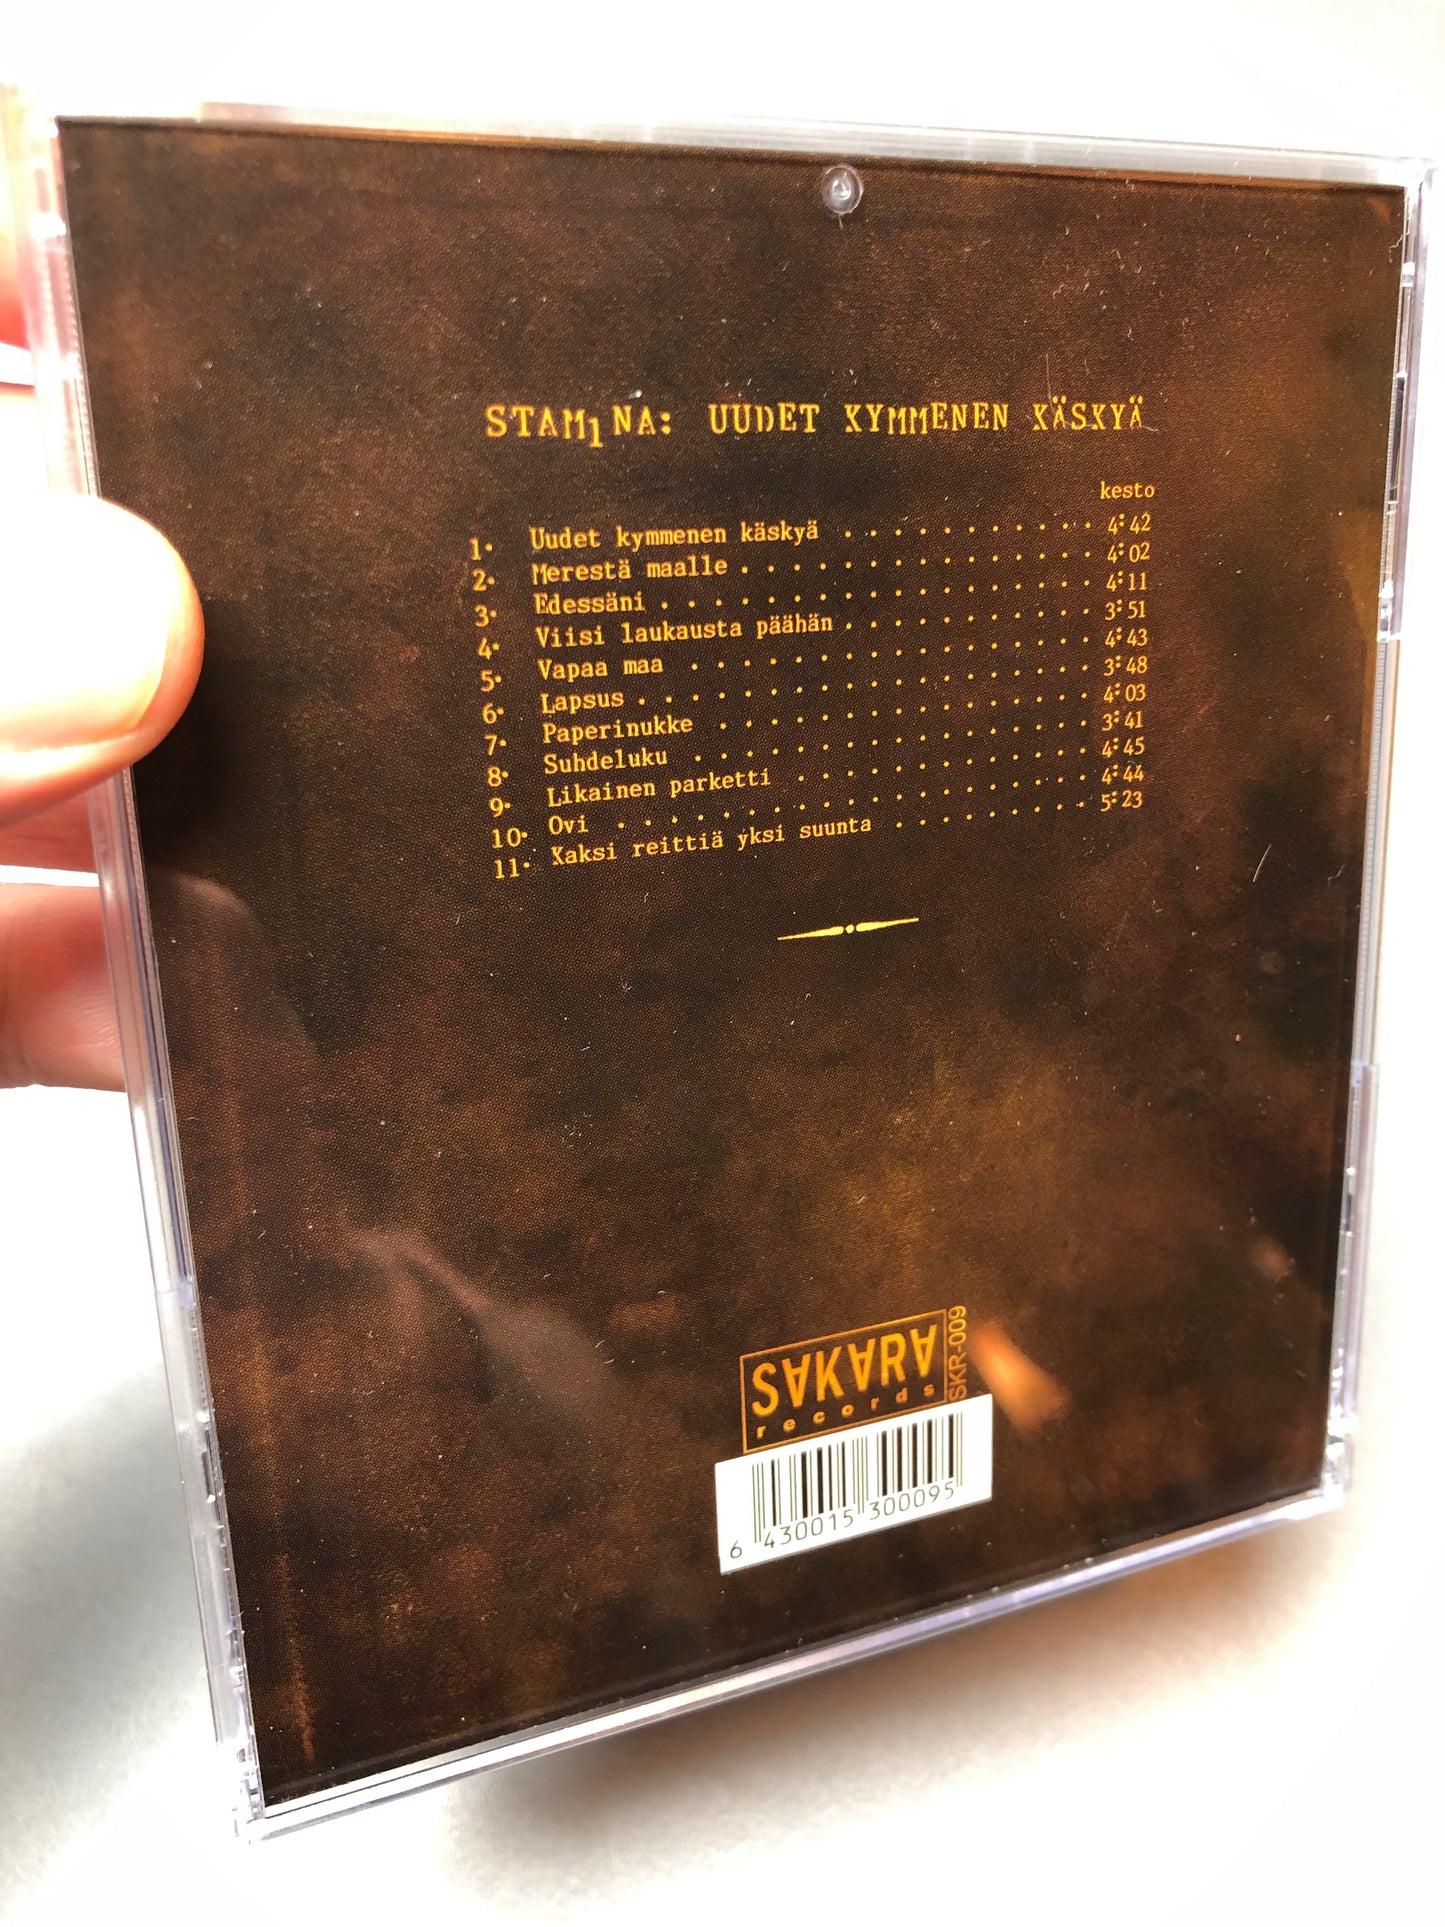 Stam1na: Uudet kymmenen käskyä, Finland 2006, 1st pressing